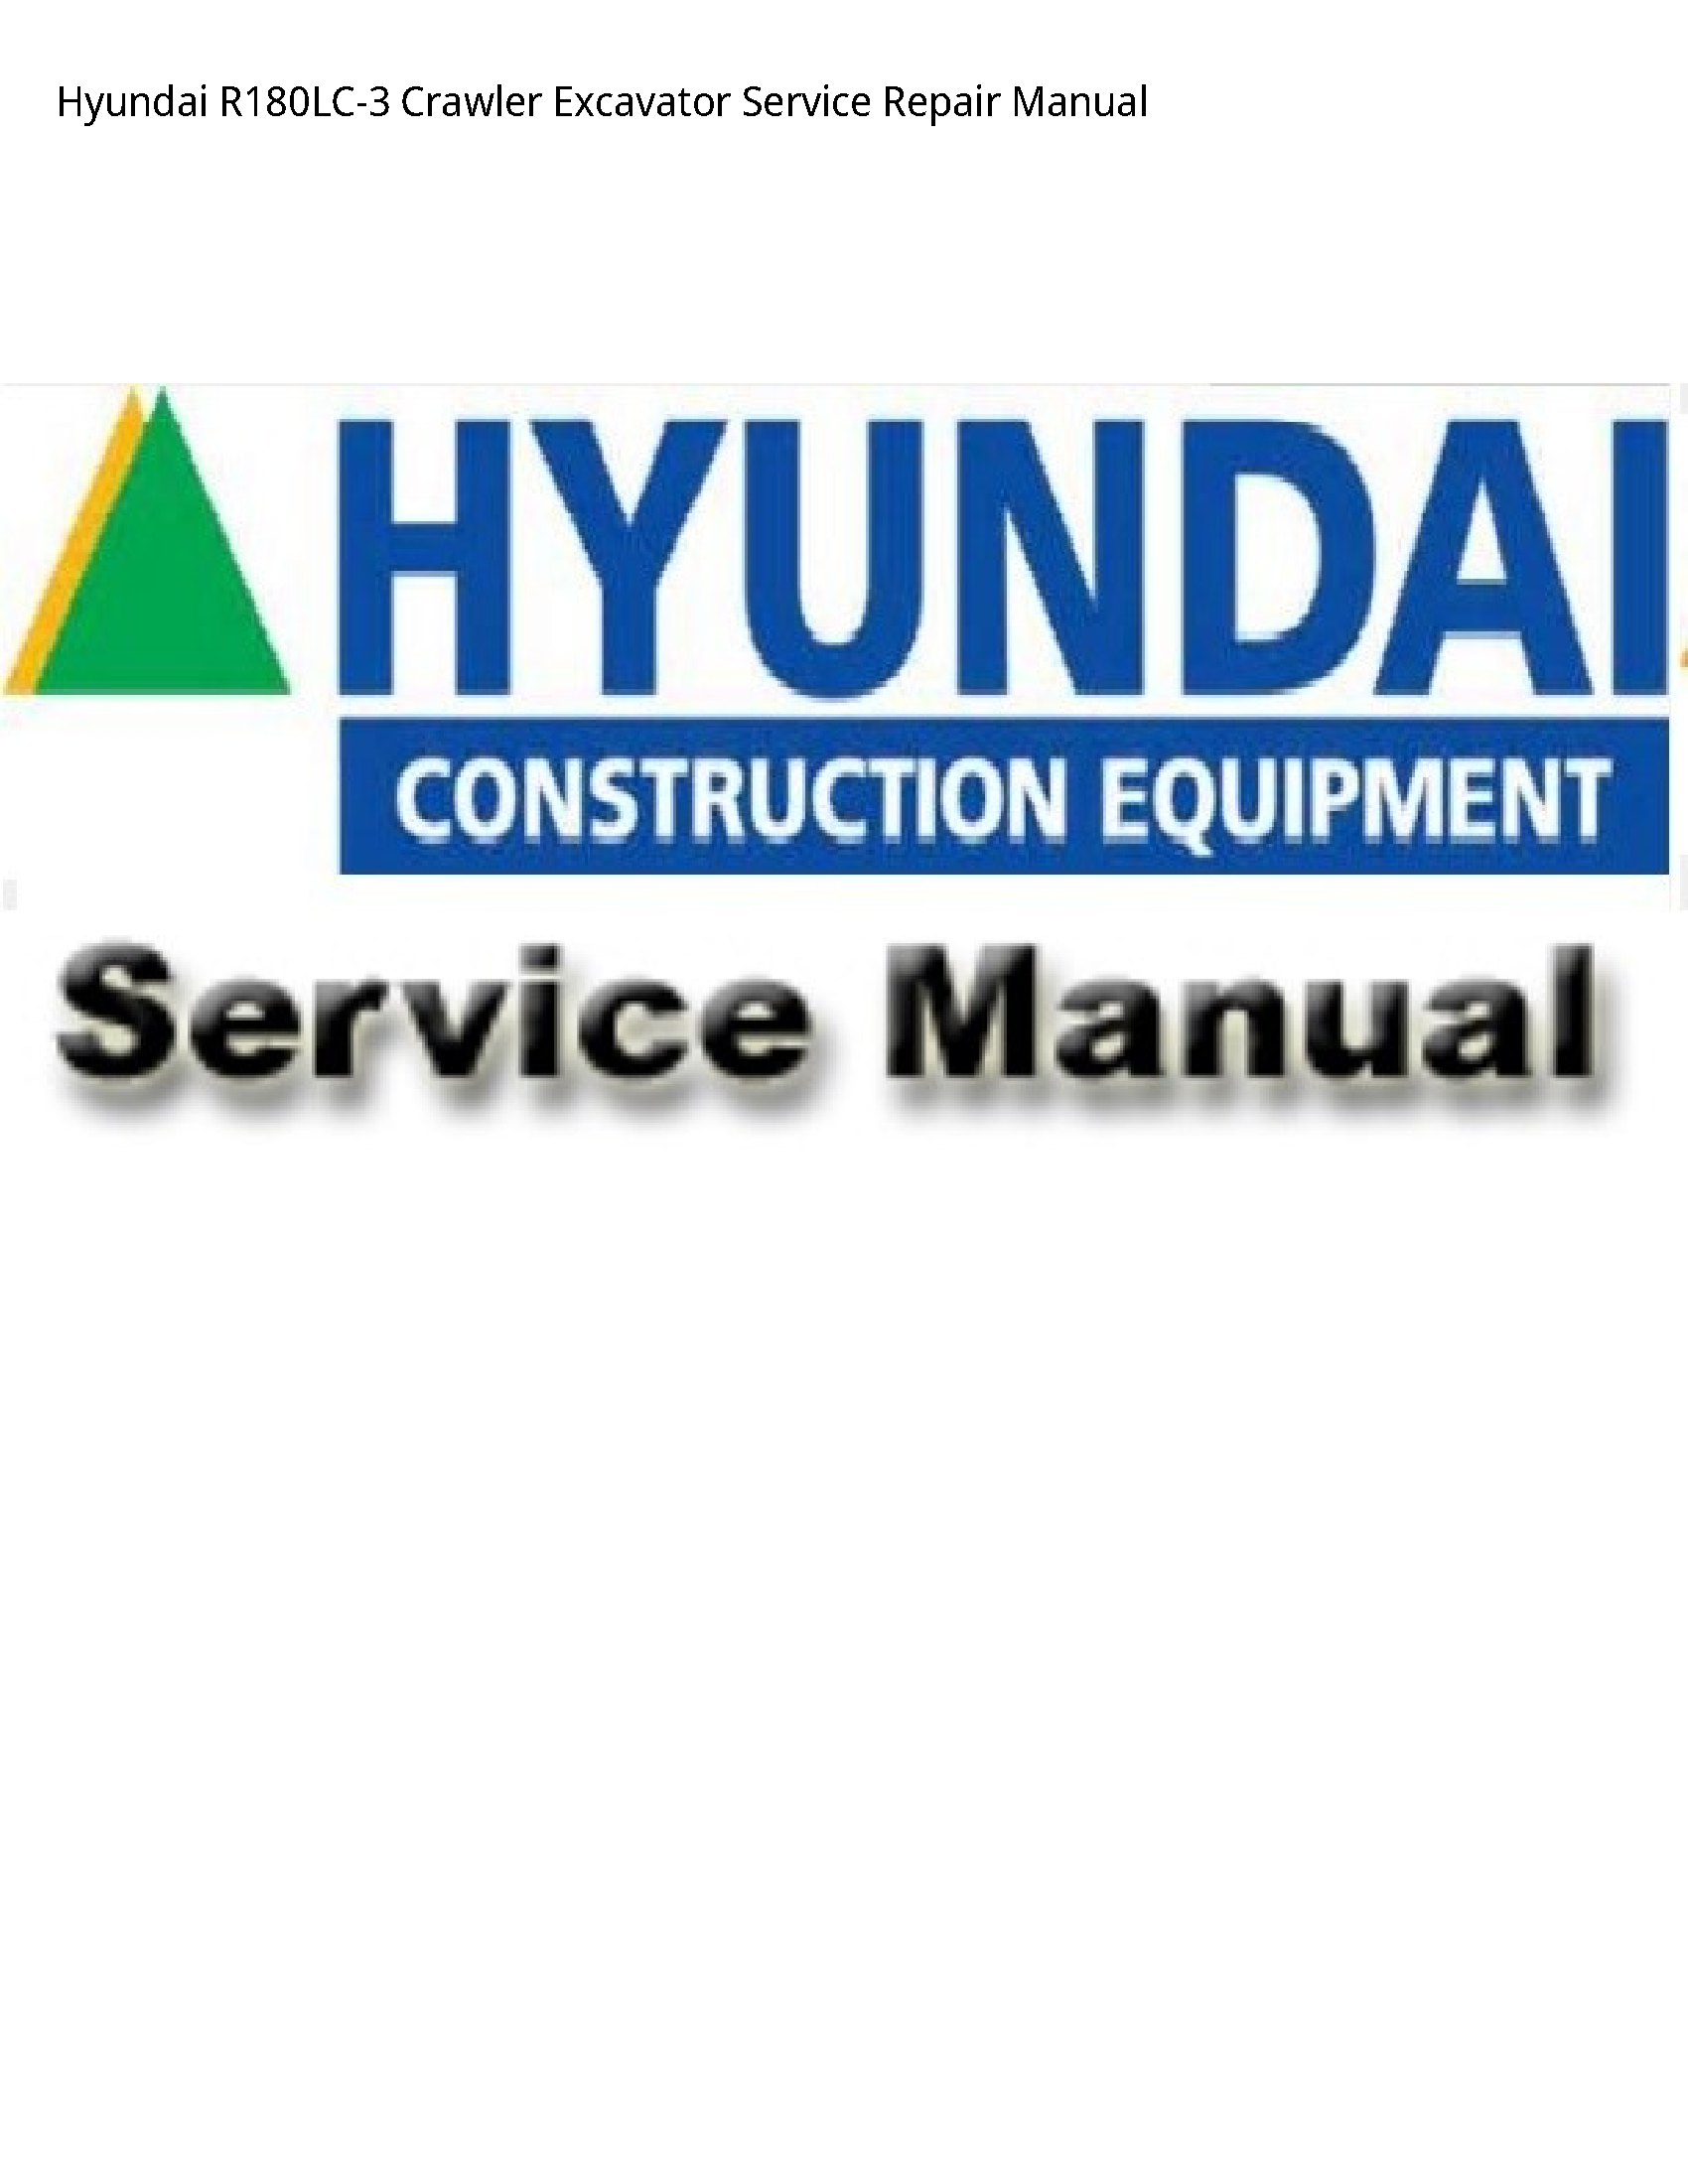 Hyundai R180LC-3 Crawler Excavator manual